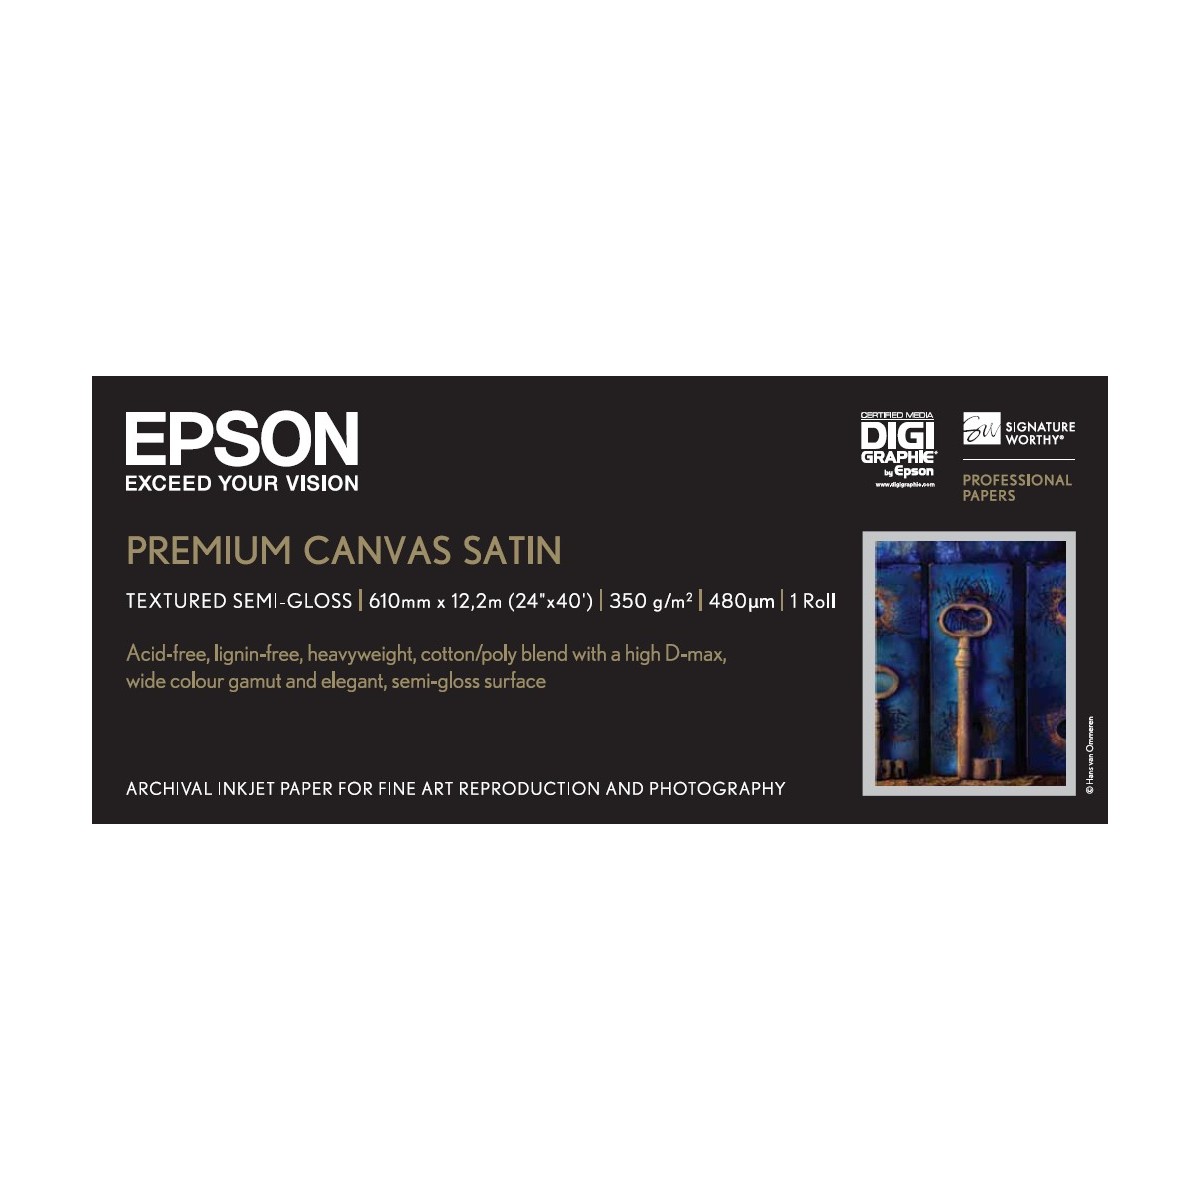 Epson Premium Canvas Satin - 24 x 12,2 m - 350g/m² - White - Satin - 350 g/m² - SureColor SC-T7200D SureColor SC-T7200 SureColor